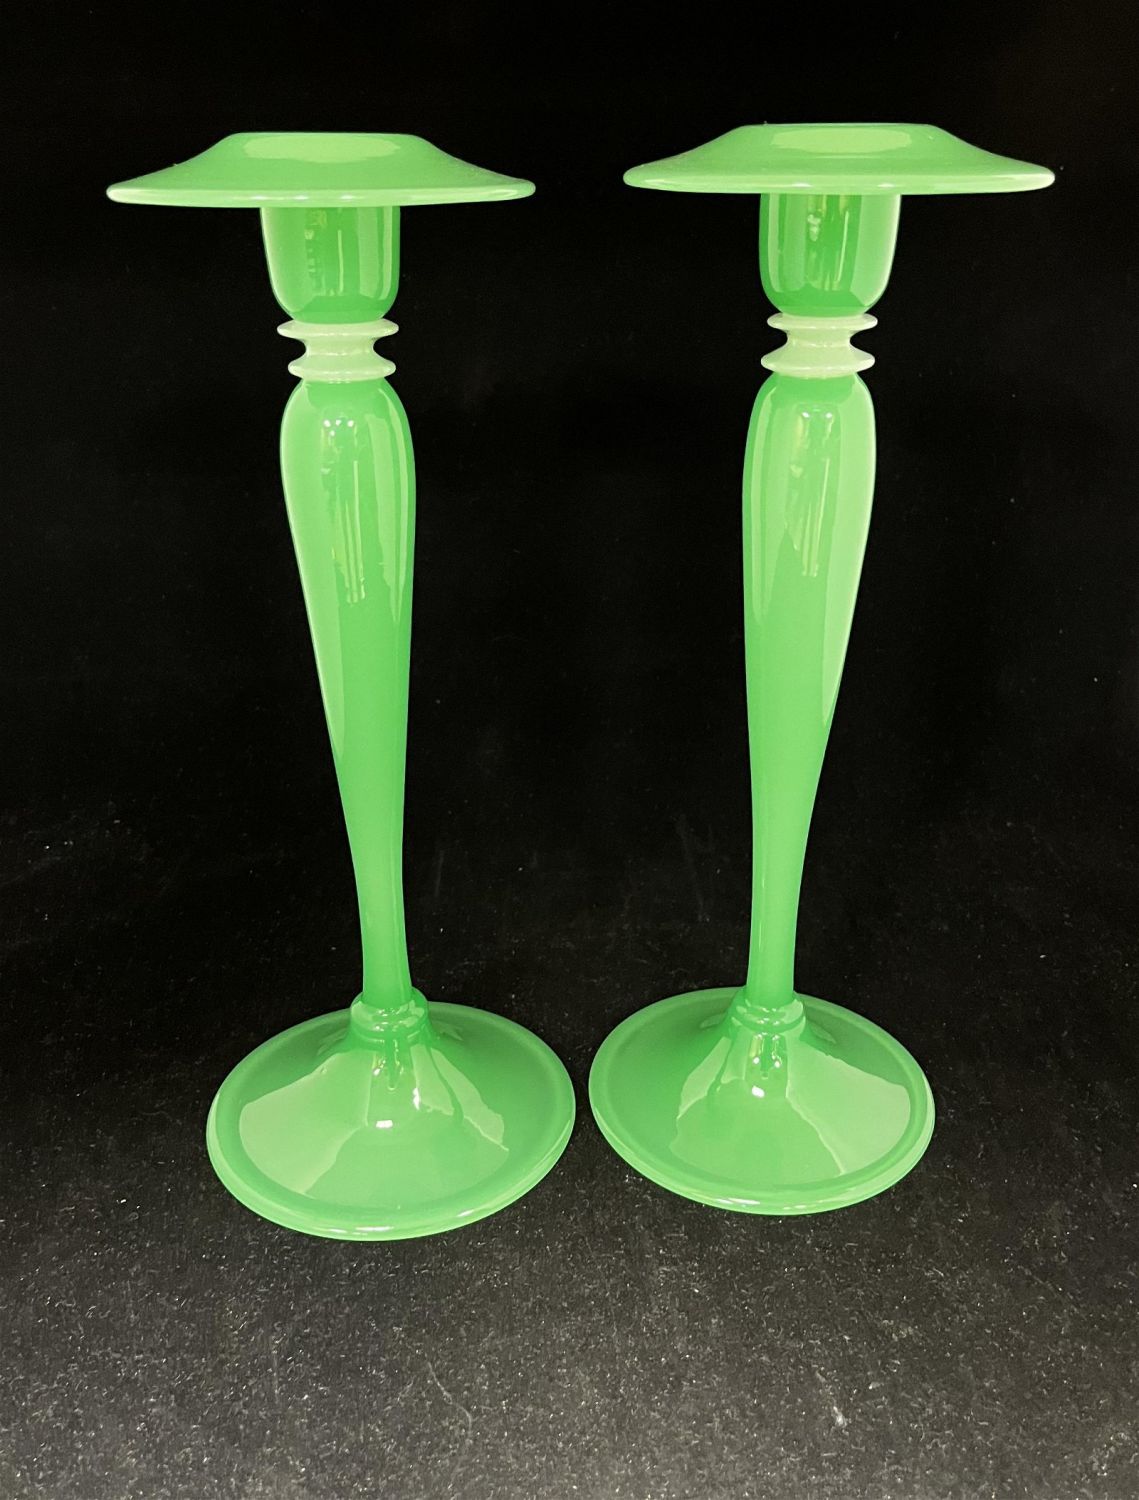 3315 - Green Jade Jade Candlestick